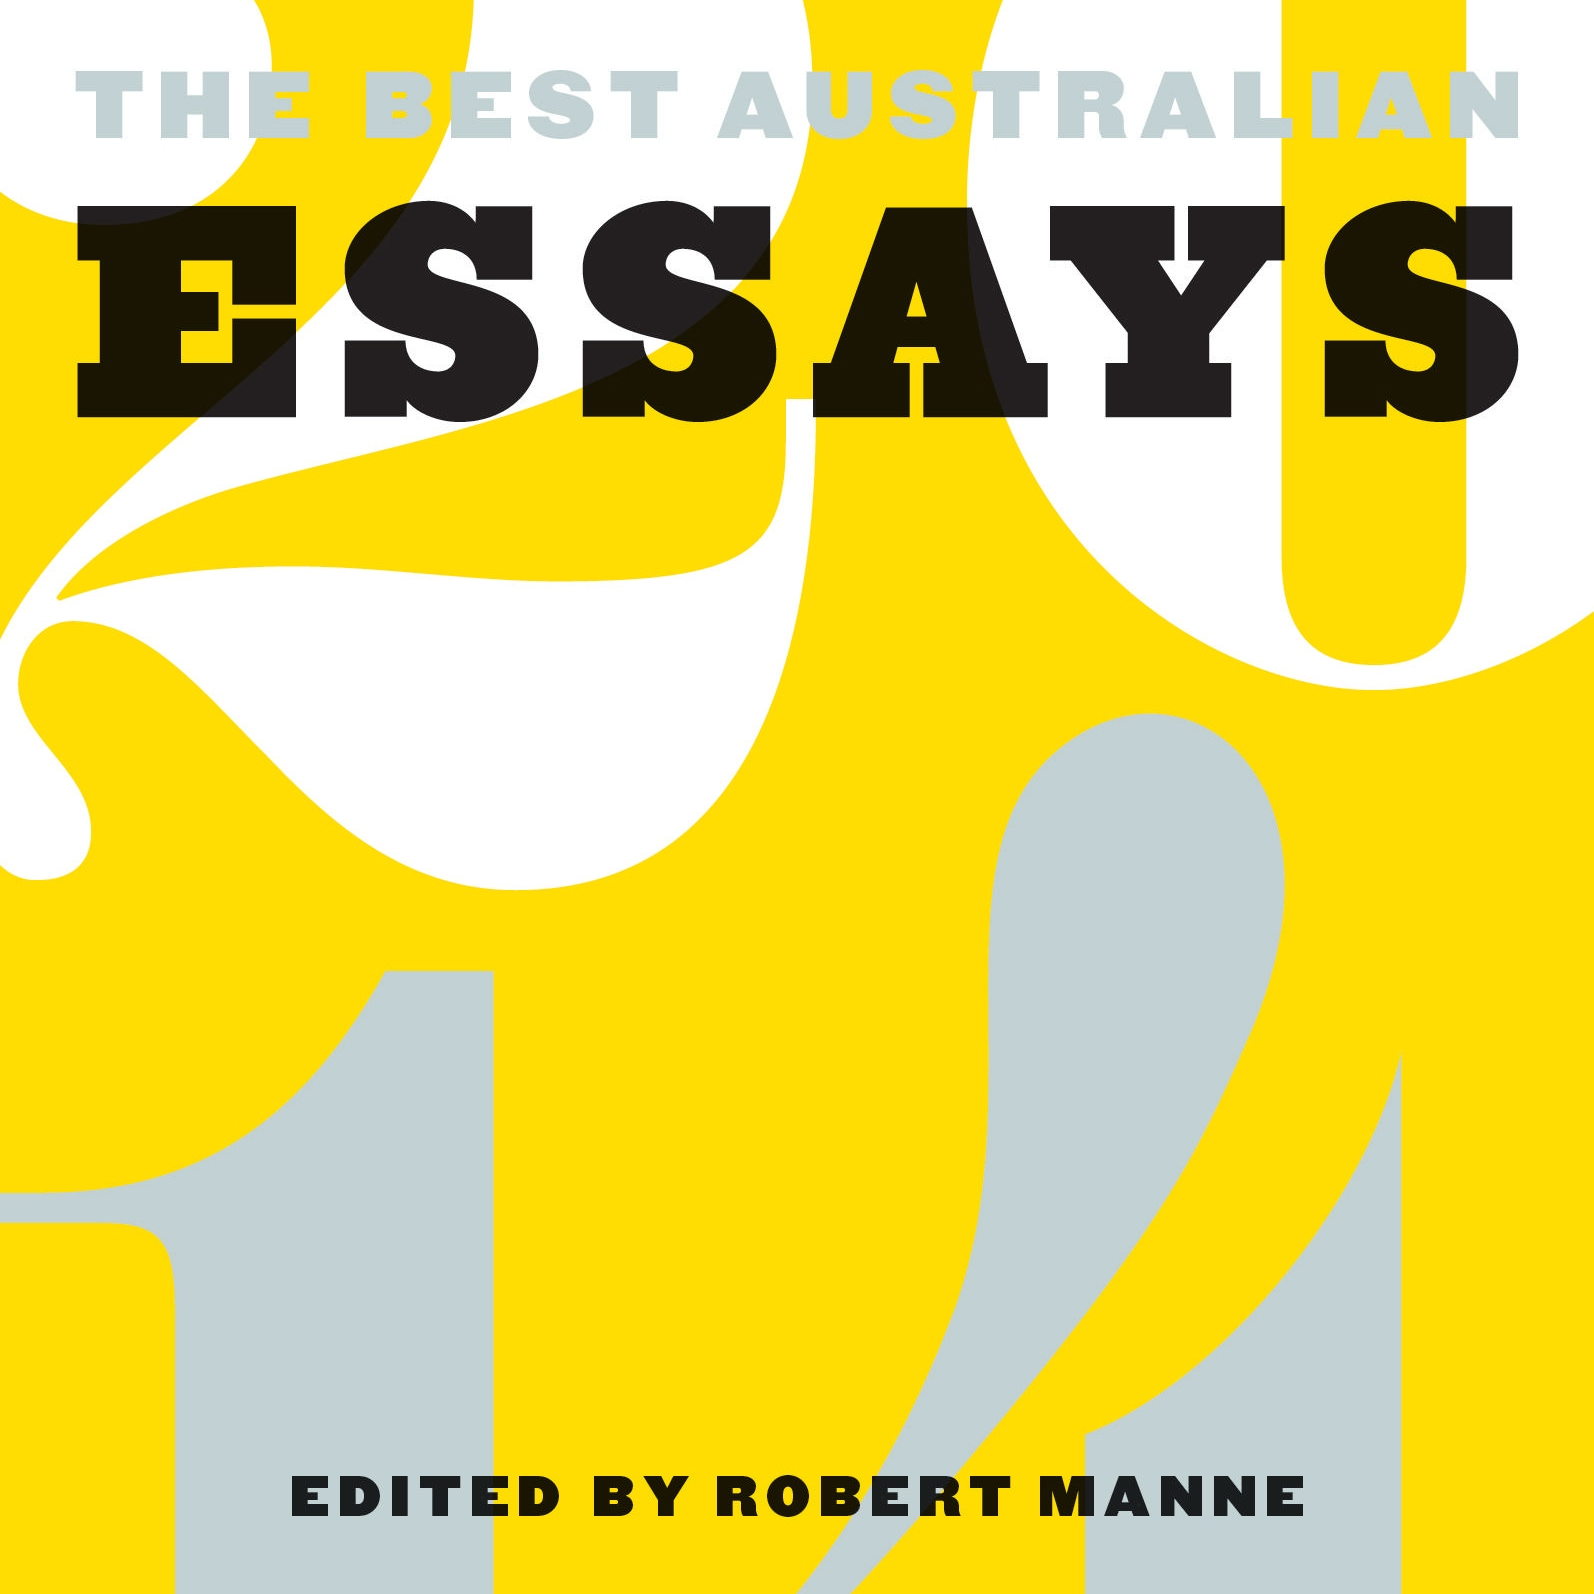 Best australian essays 2013